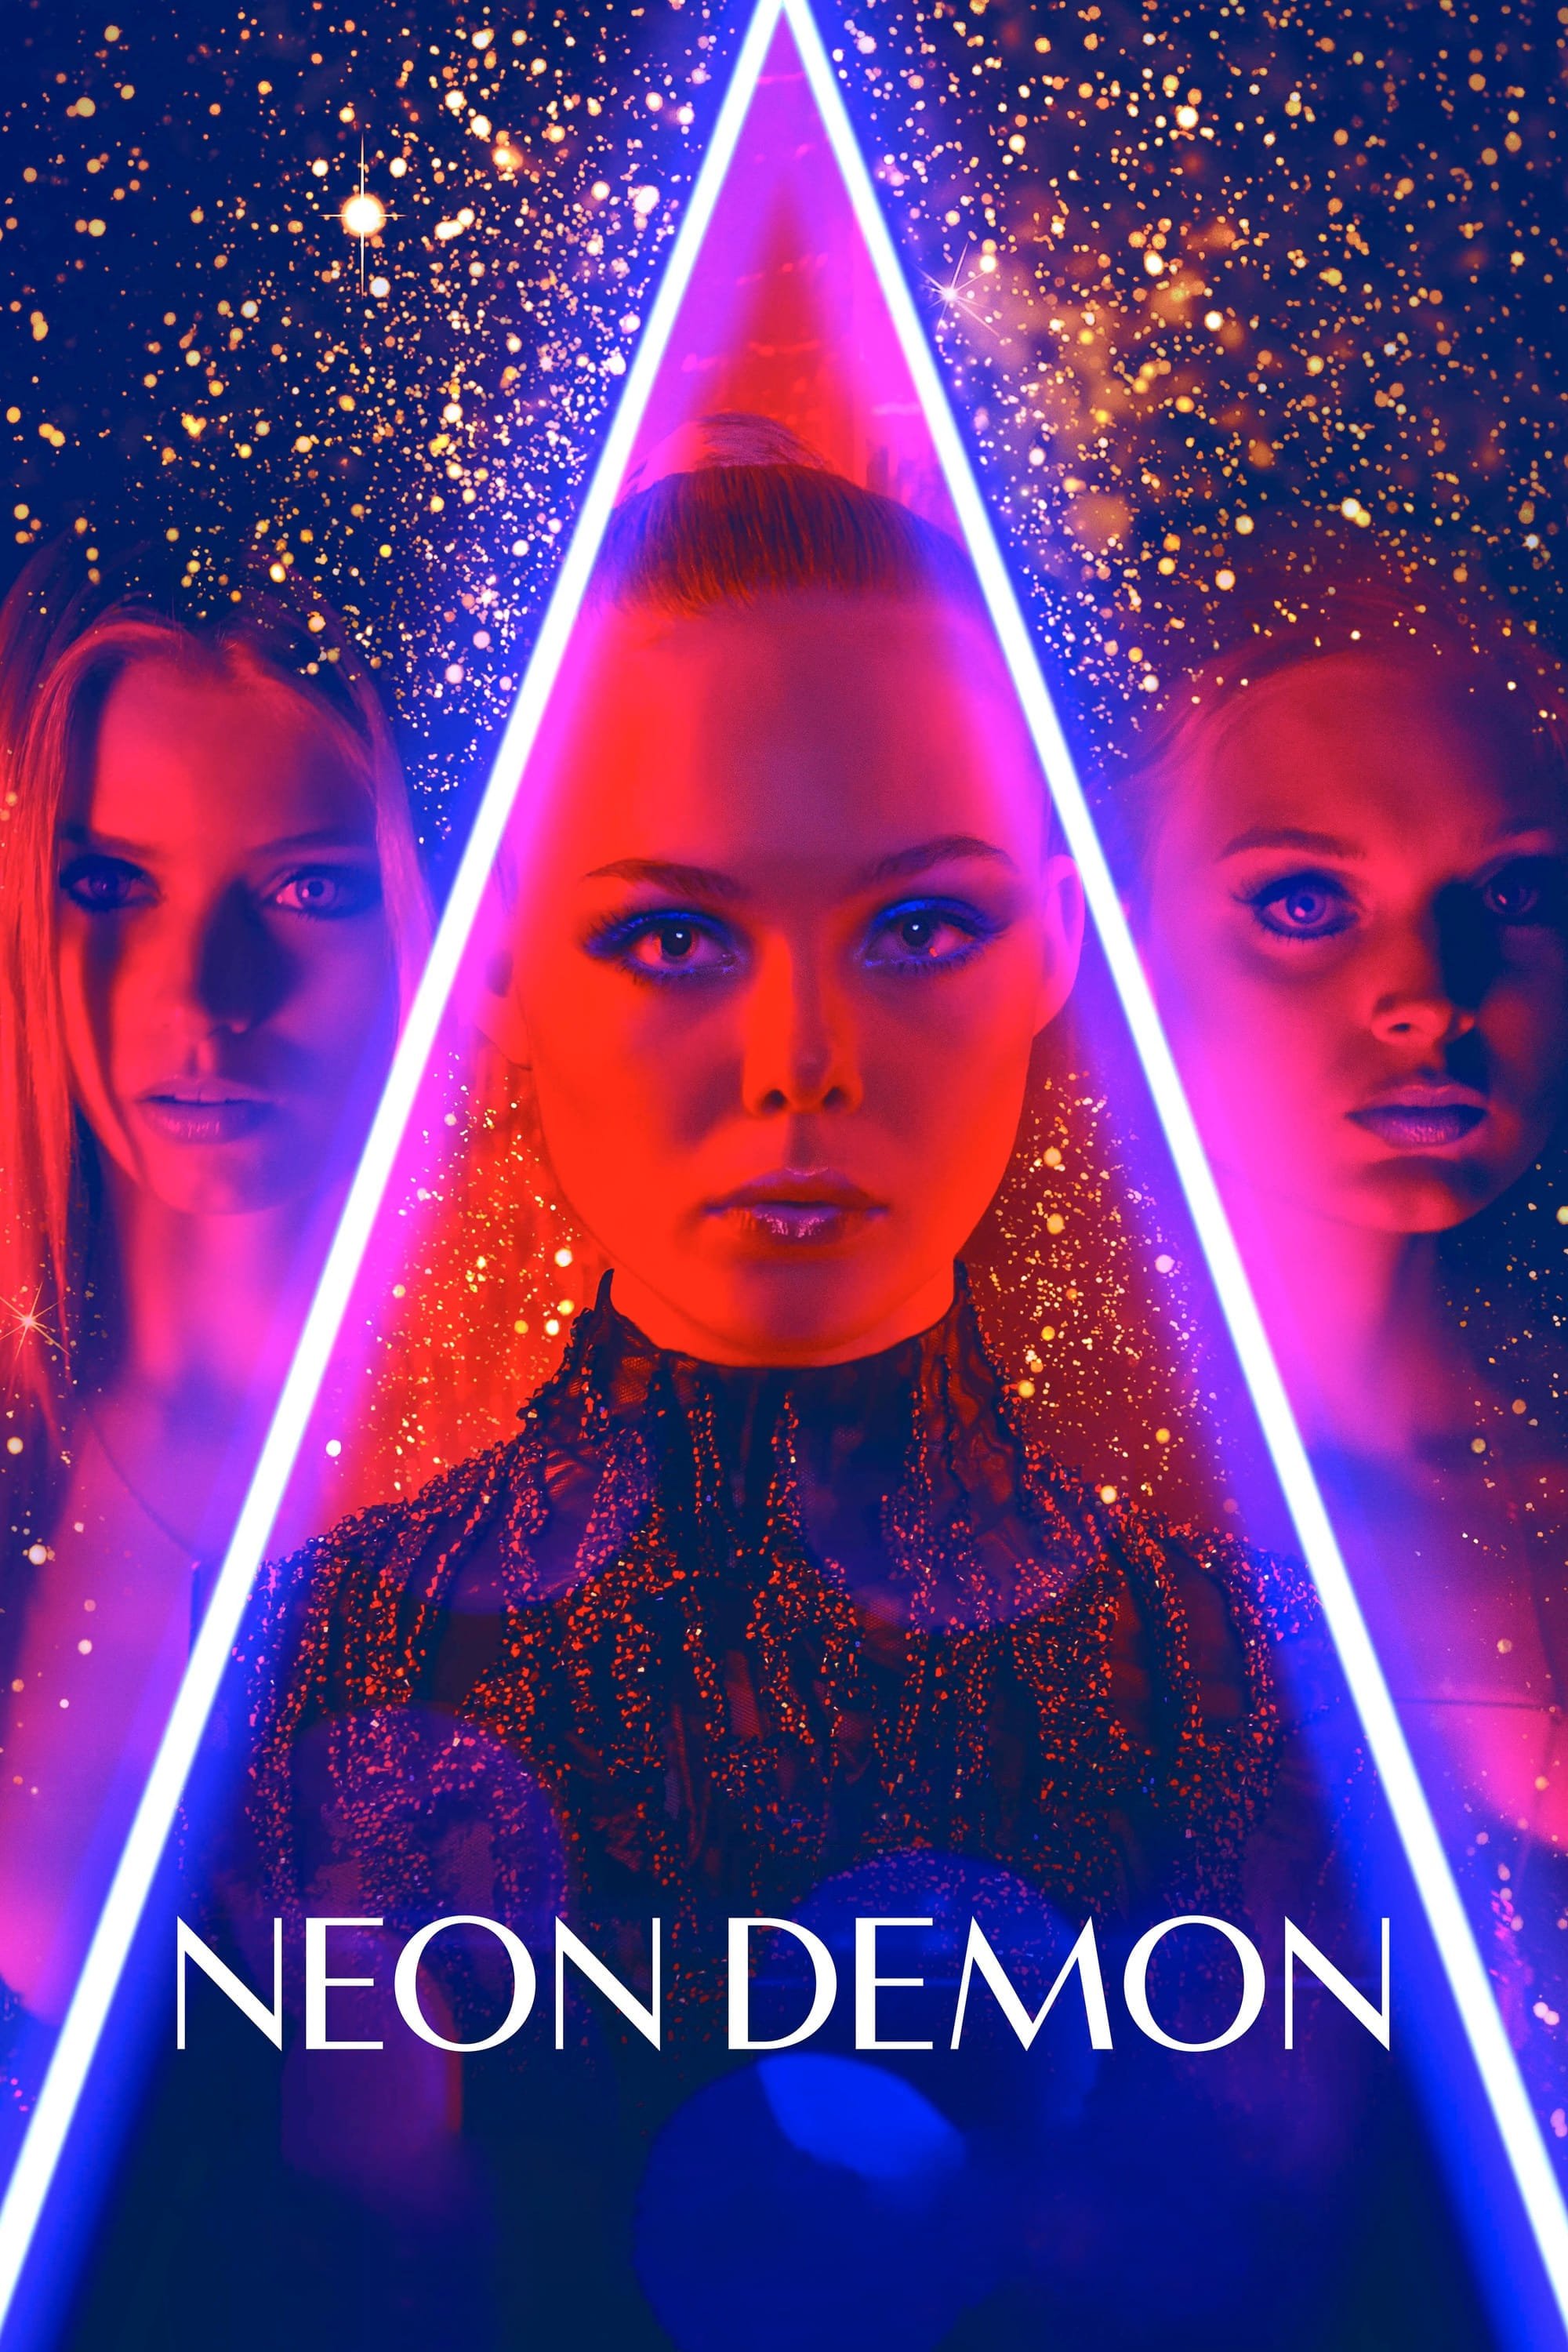 The Neon Demon